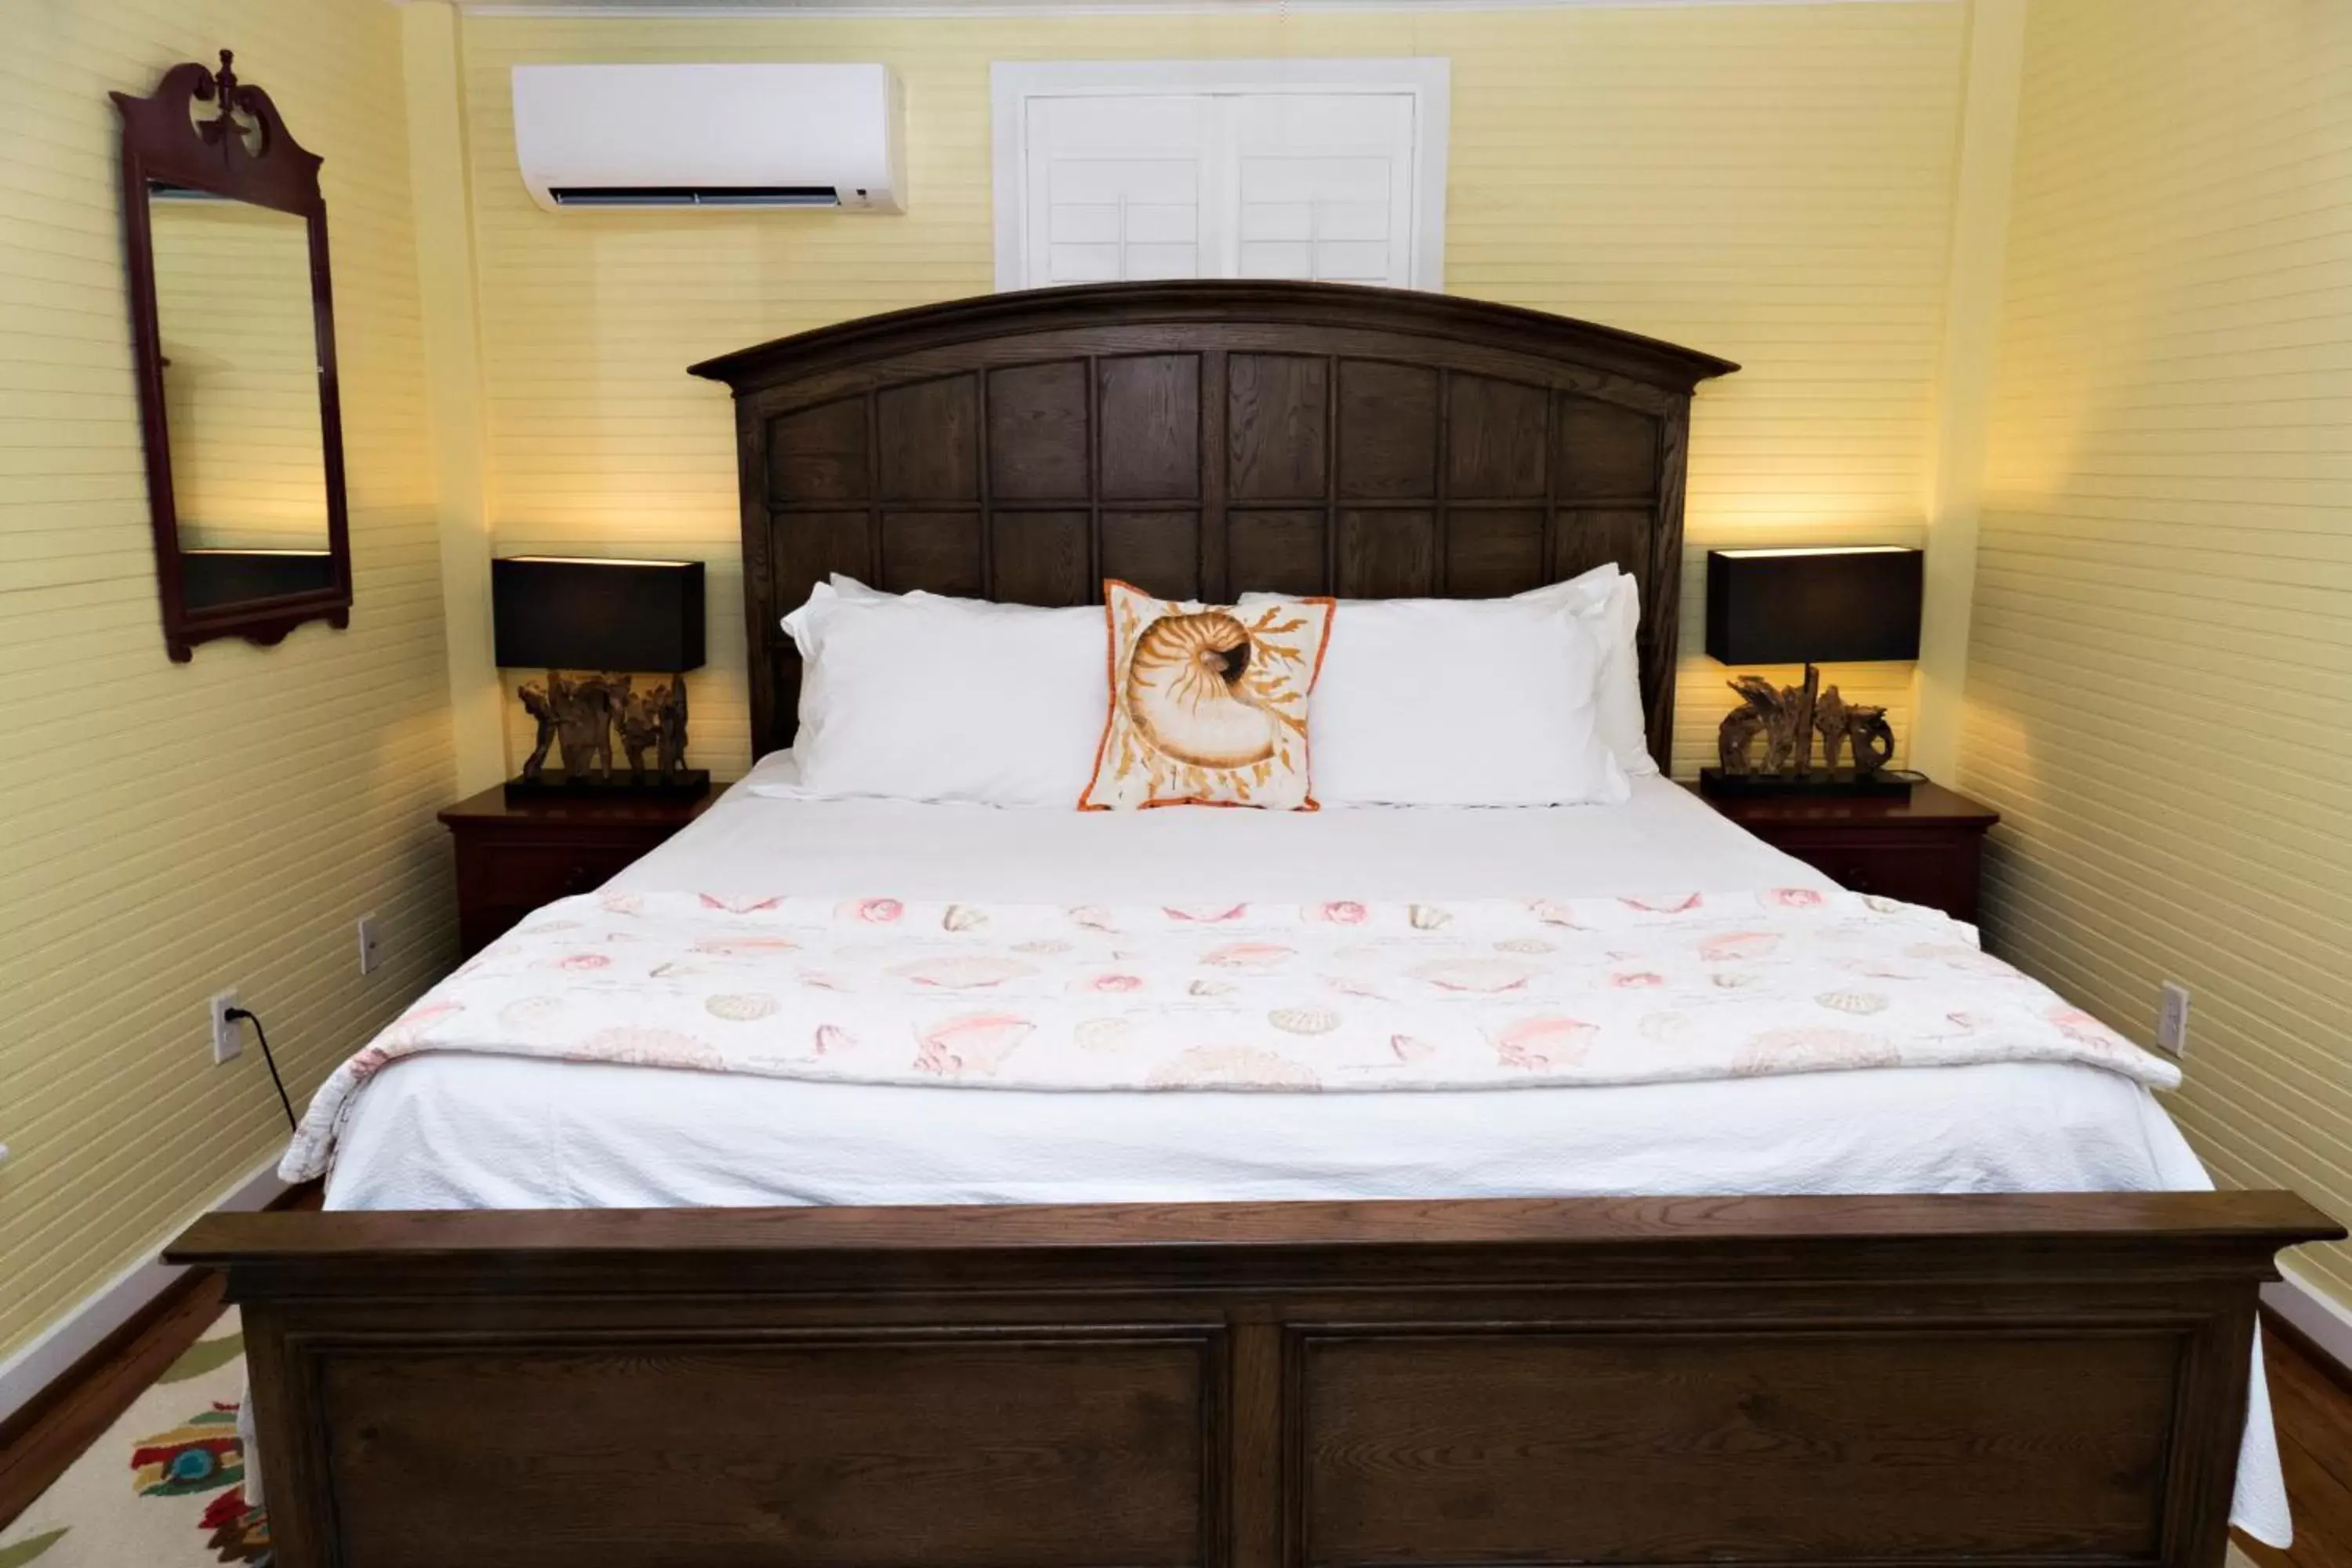 Bed, Room Photo in Beachview Inn and Spa